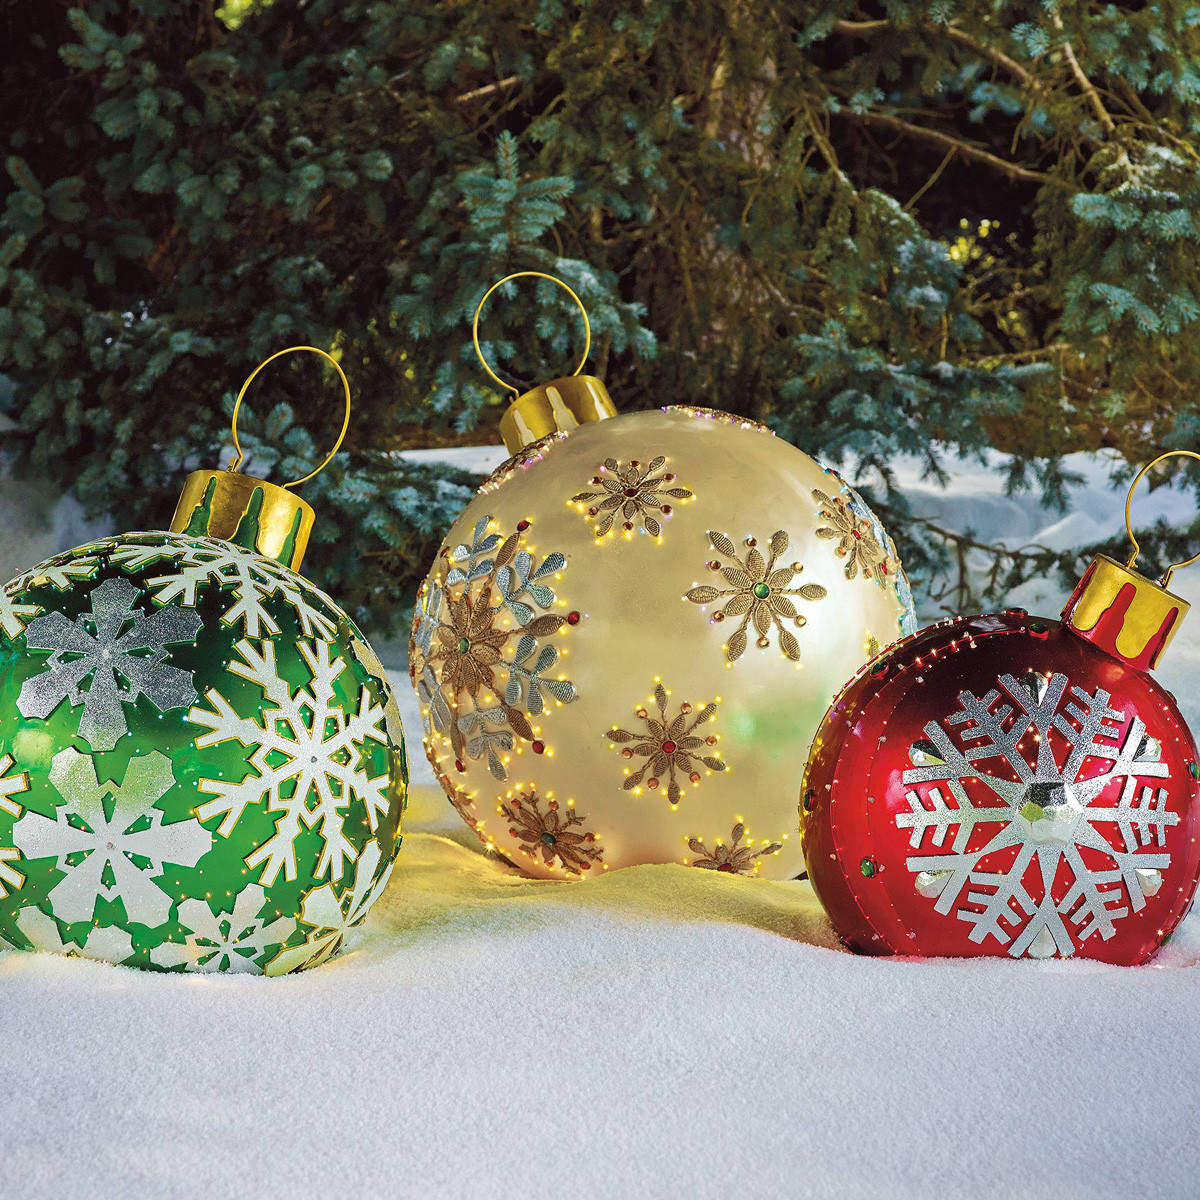 Christmas Outdoor Decor
 Massive Fiber Optic LED Outdoor Christmas Ornaments The